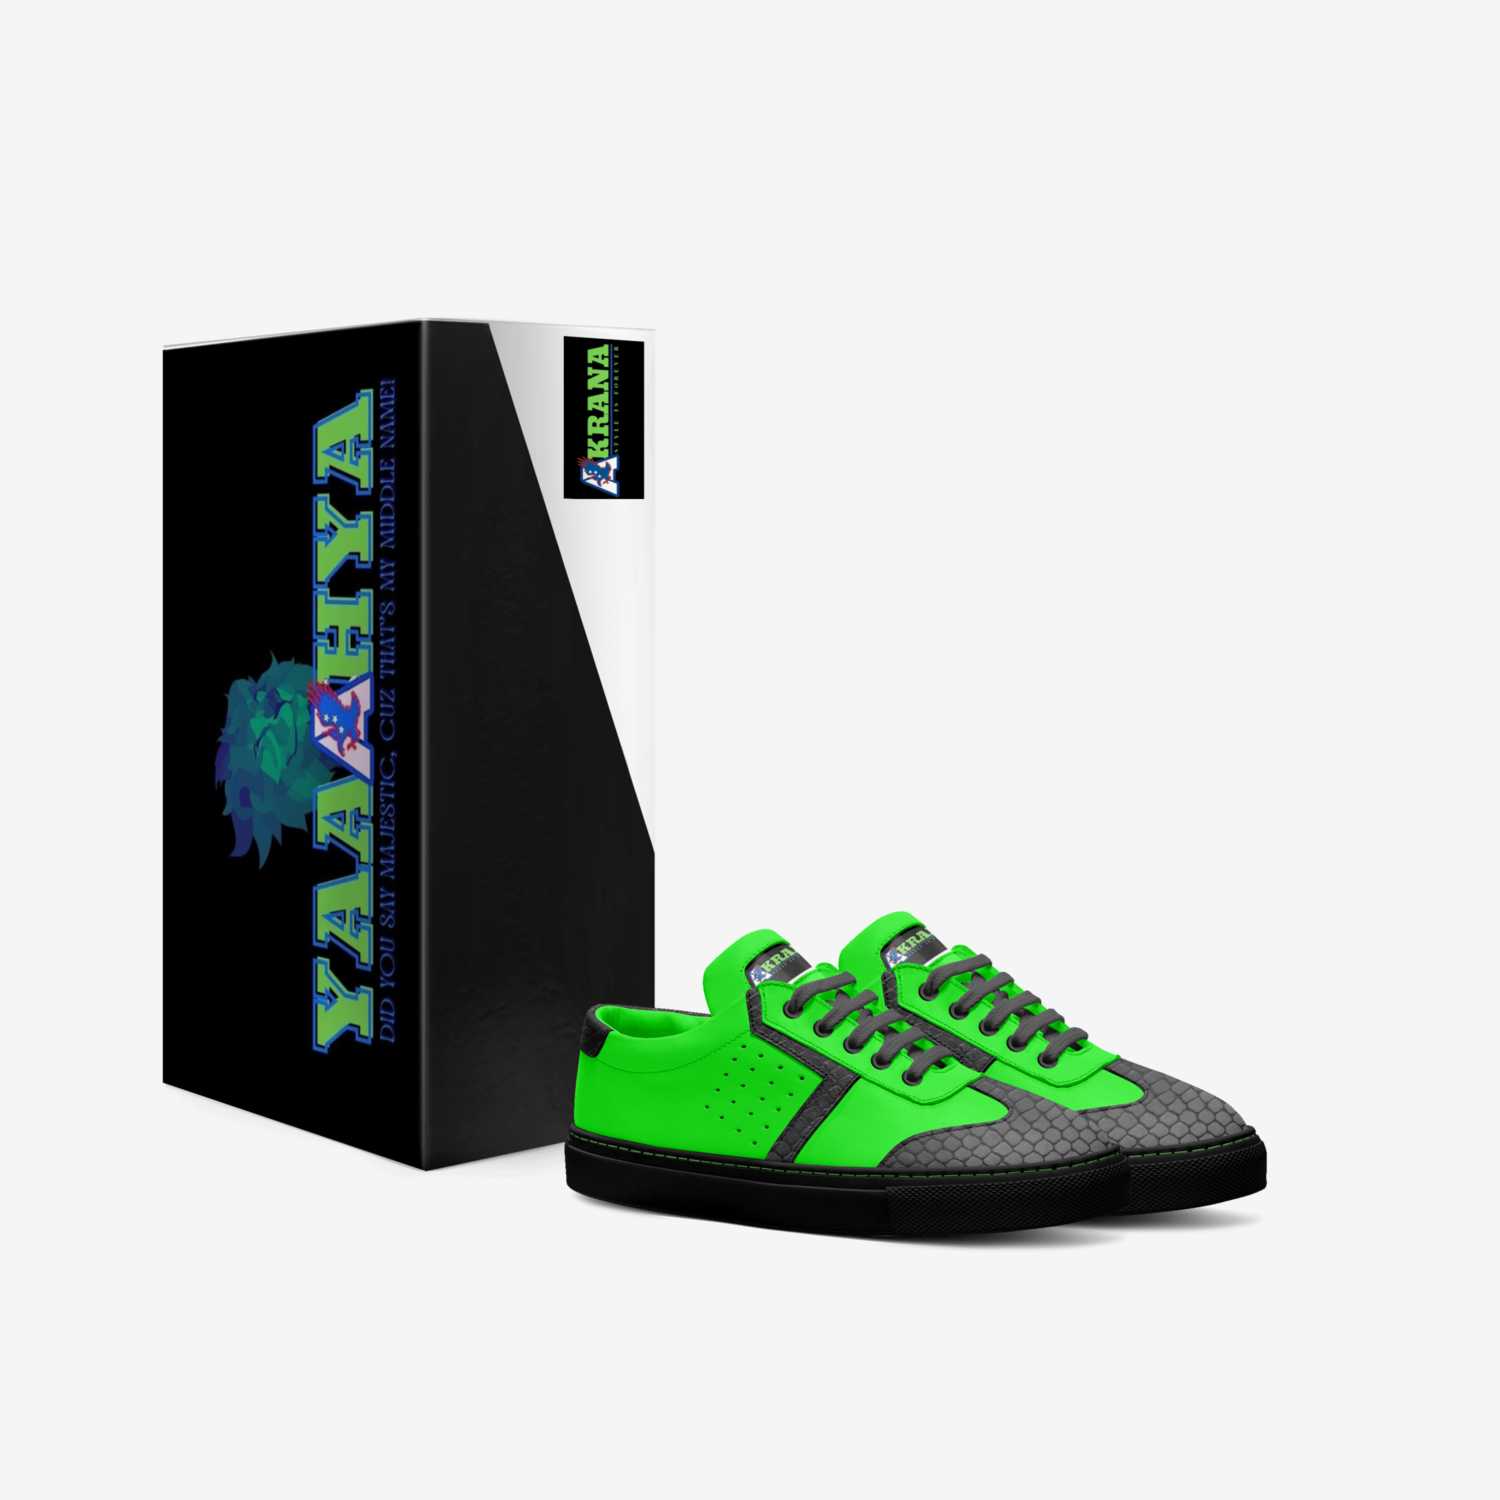 YAAAHYA custom made in Italy shoes by Abdulkhadir Mwanambaji | Box view